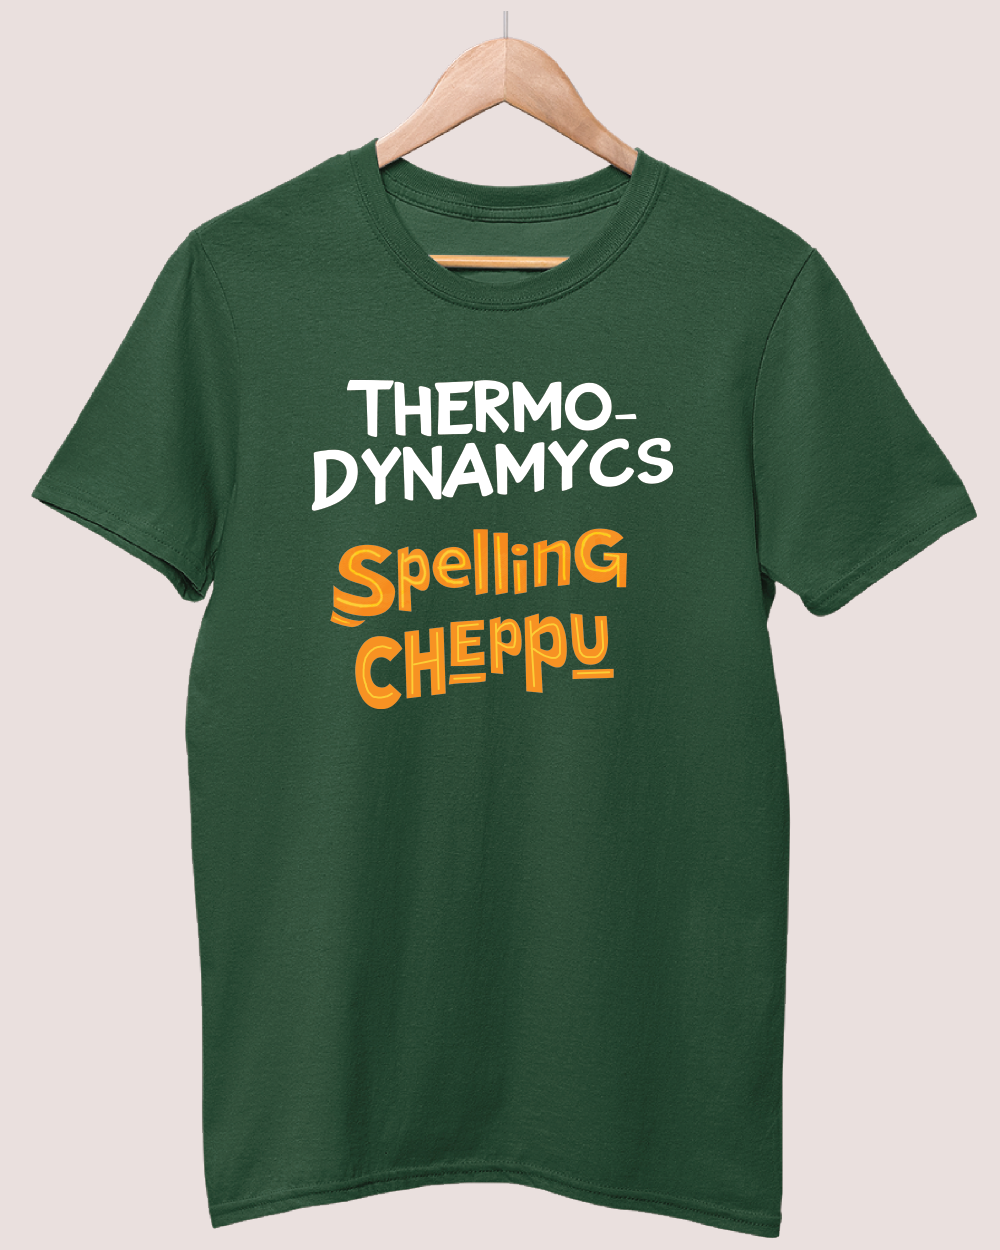 Thermodynamics Spelling Cheppu T-shirt